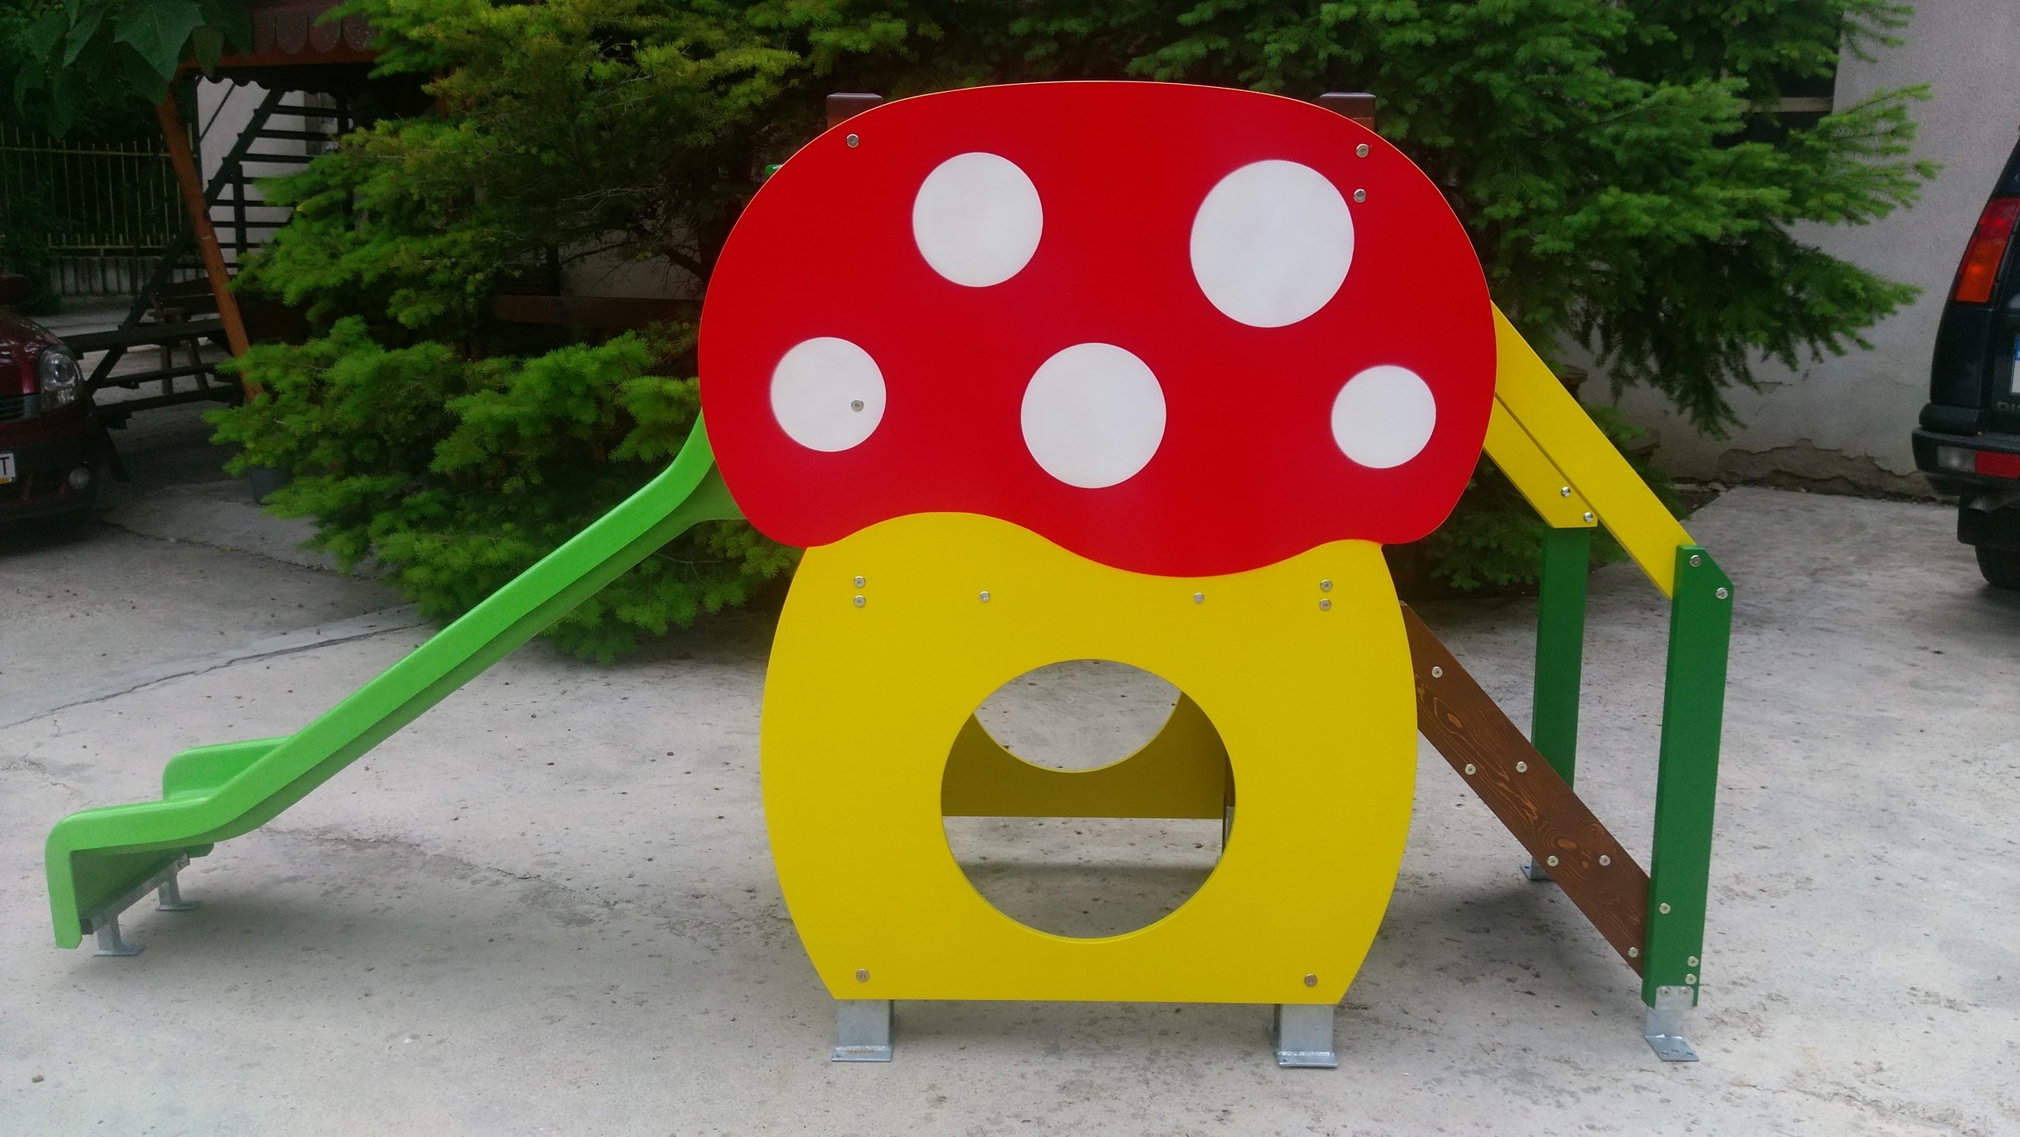 Combined playground equipment, model КД96 – Slide “Mushroom”